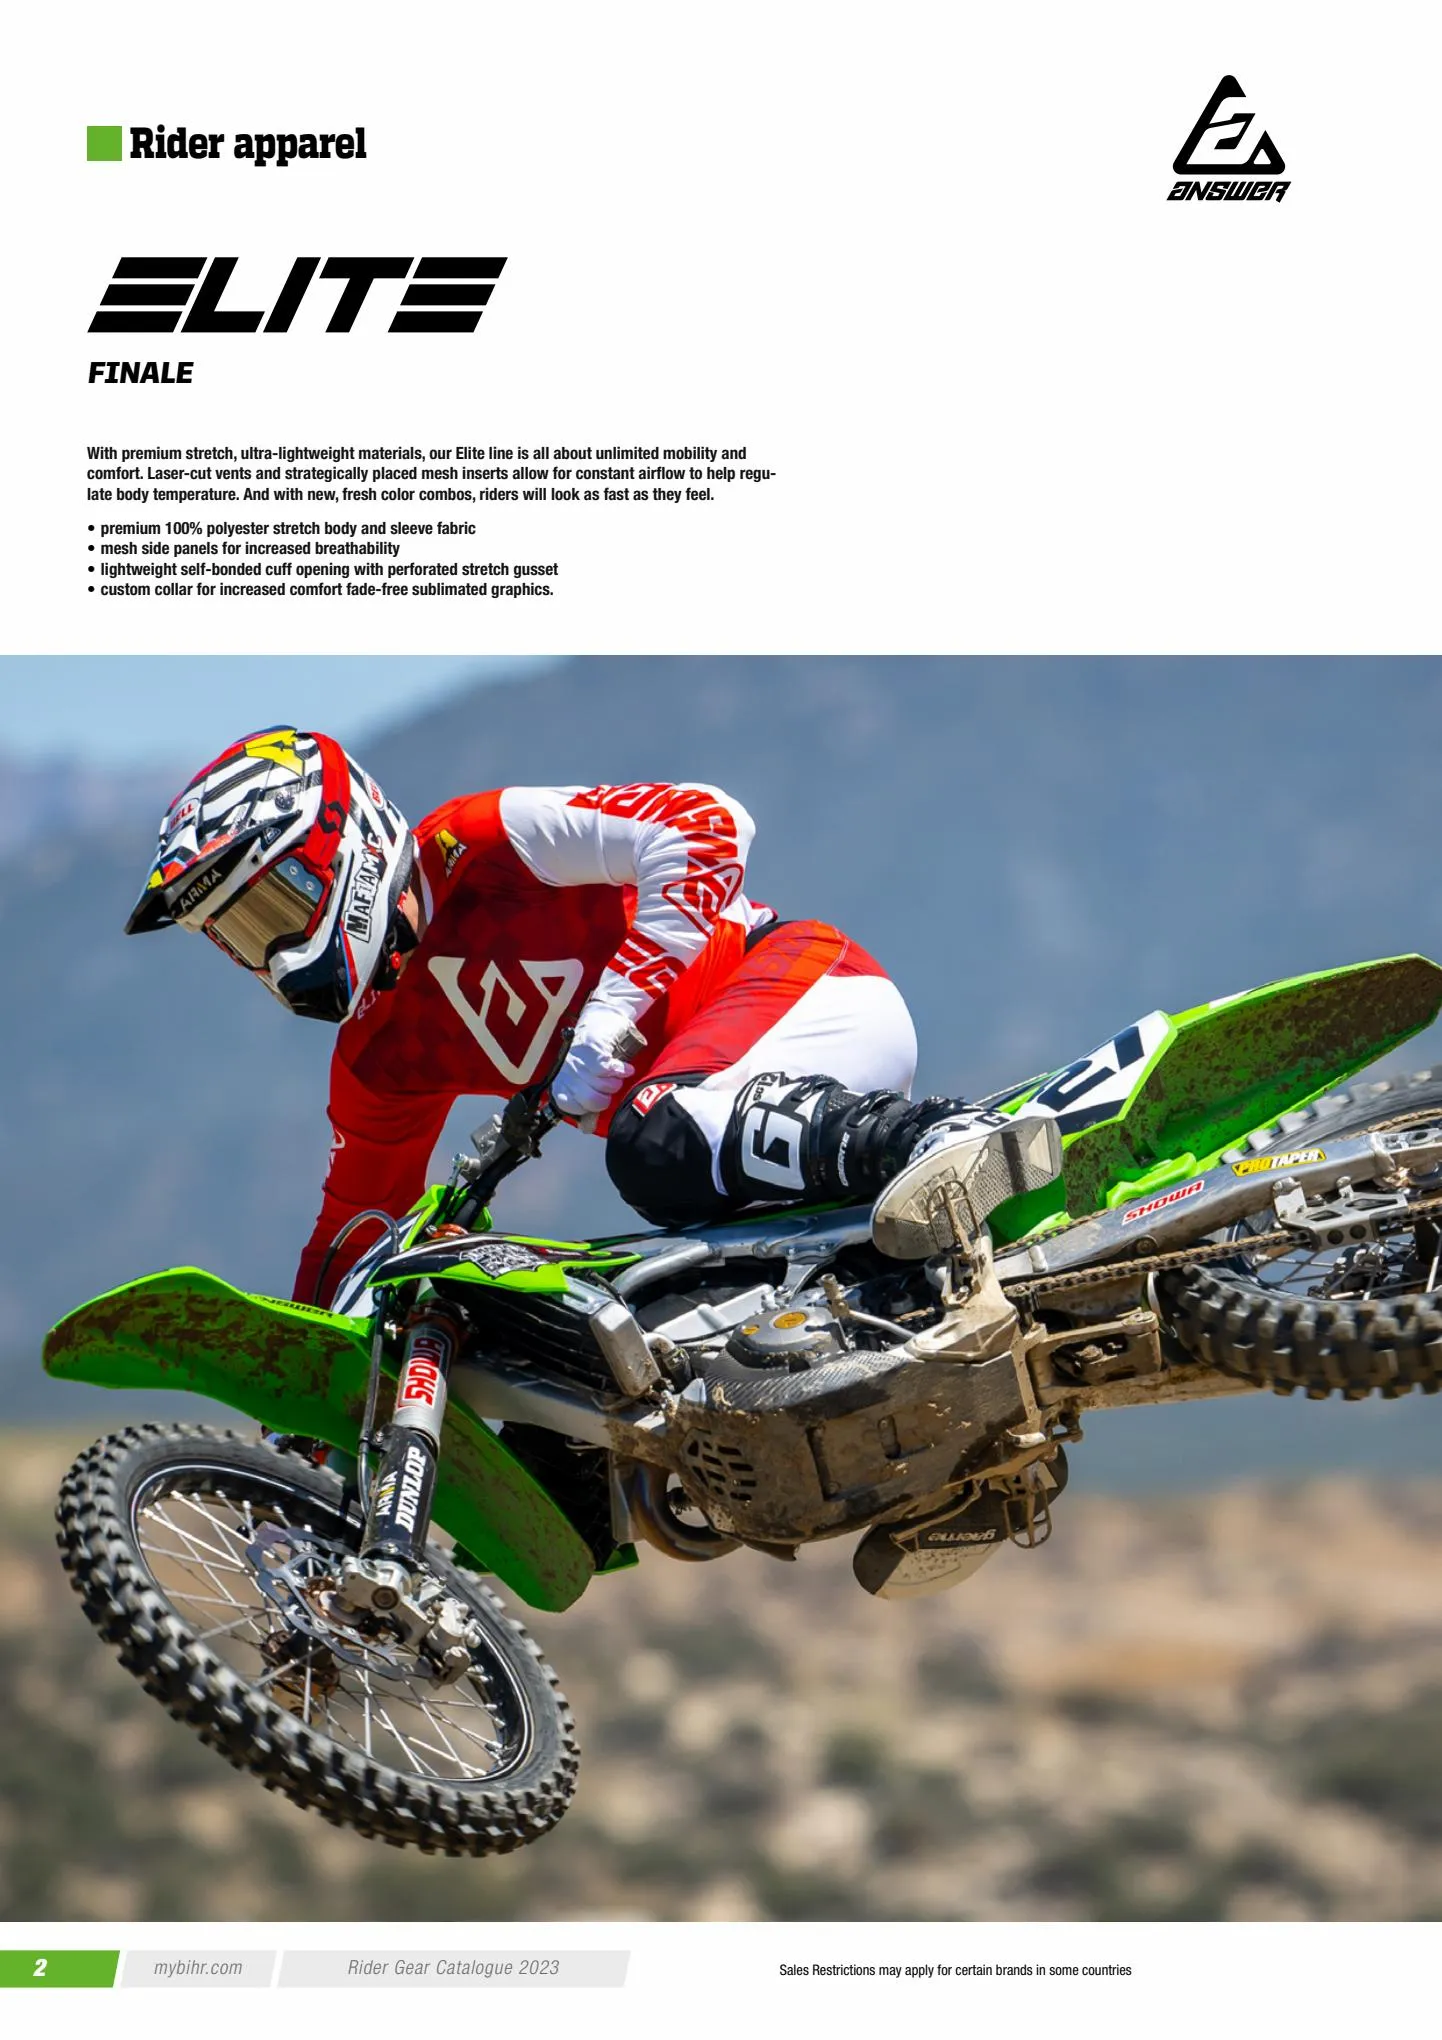 Catalogue Catalogue ANSWER - Rider gear 2023 , page 00004